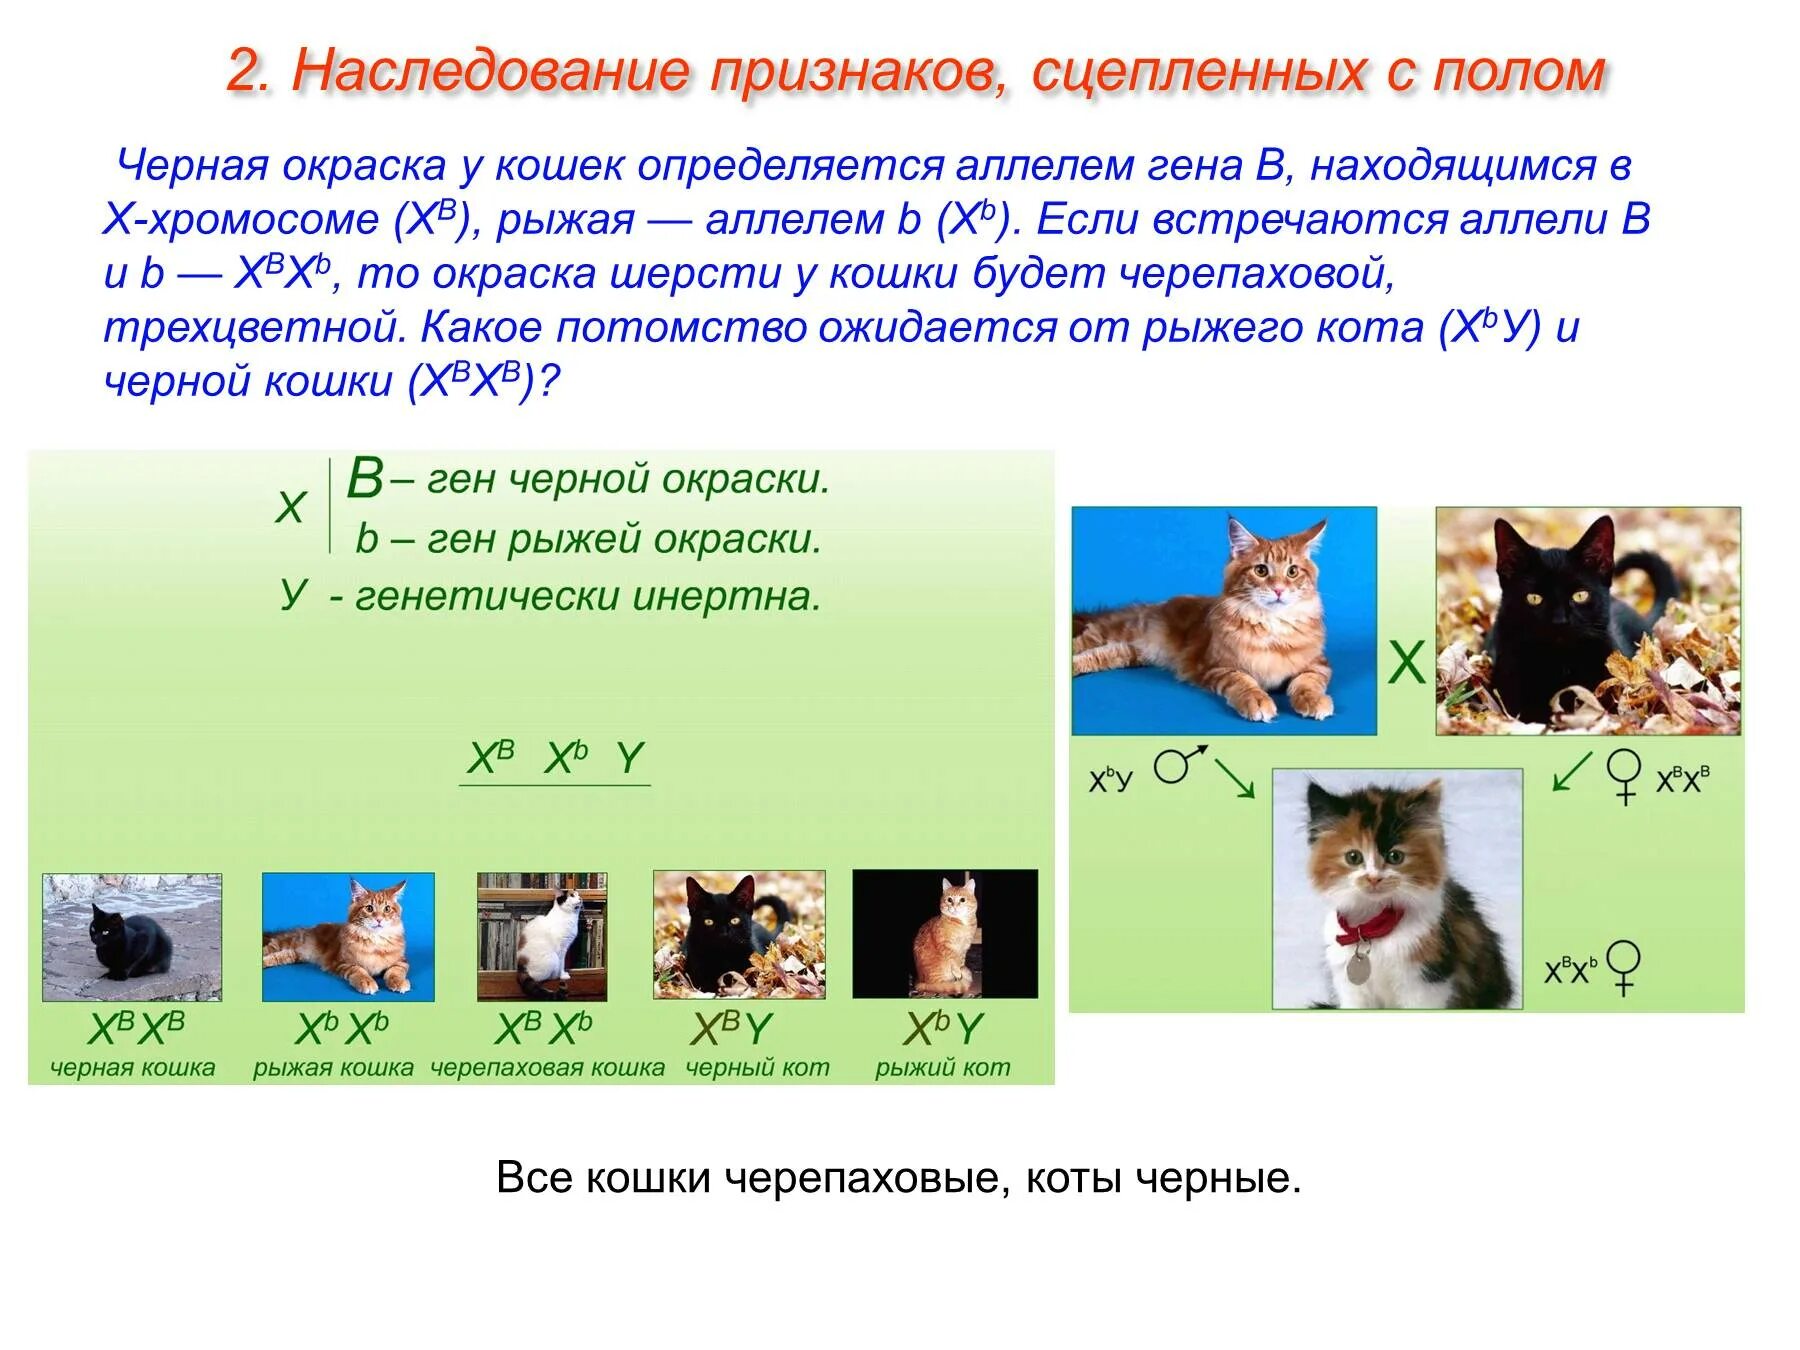 Ген короткой шерсти а у кошек доминирует. Наследование окраски у кошек. Наследование окраски шерсти у кошек. Наследование цвета шерсти у кошек. Окраска шерсти кошки.